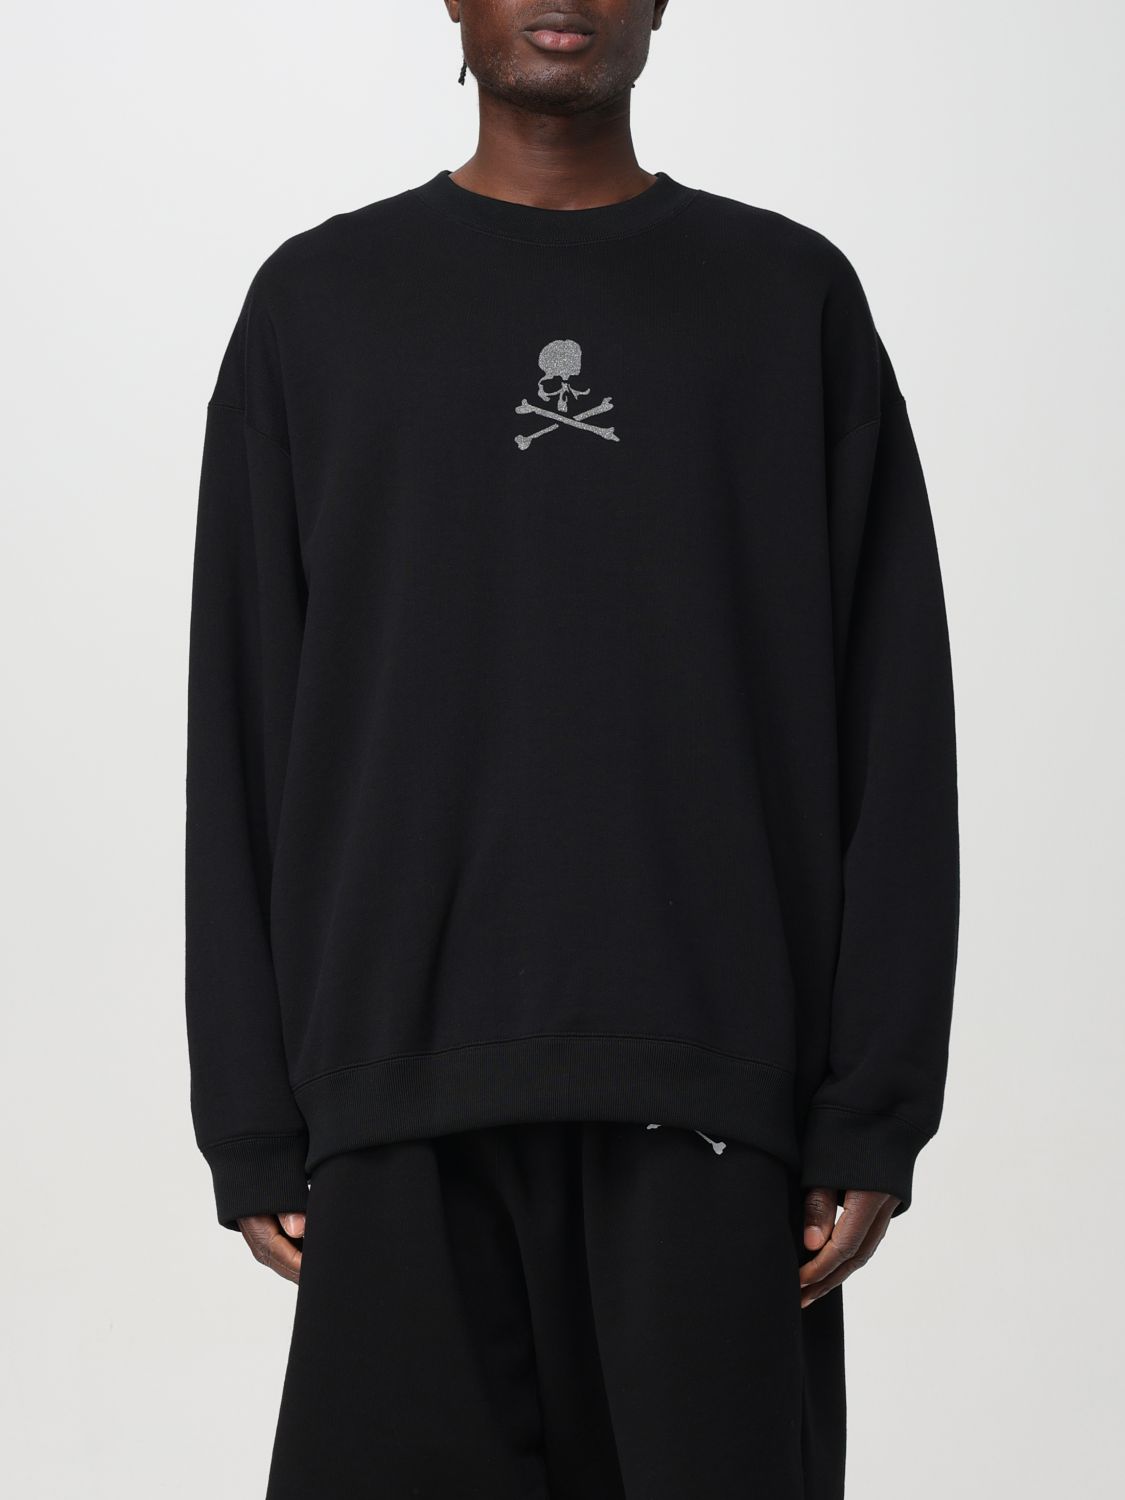 Mastermind Japan Sweatshirt Mastermind World Men Color Black